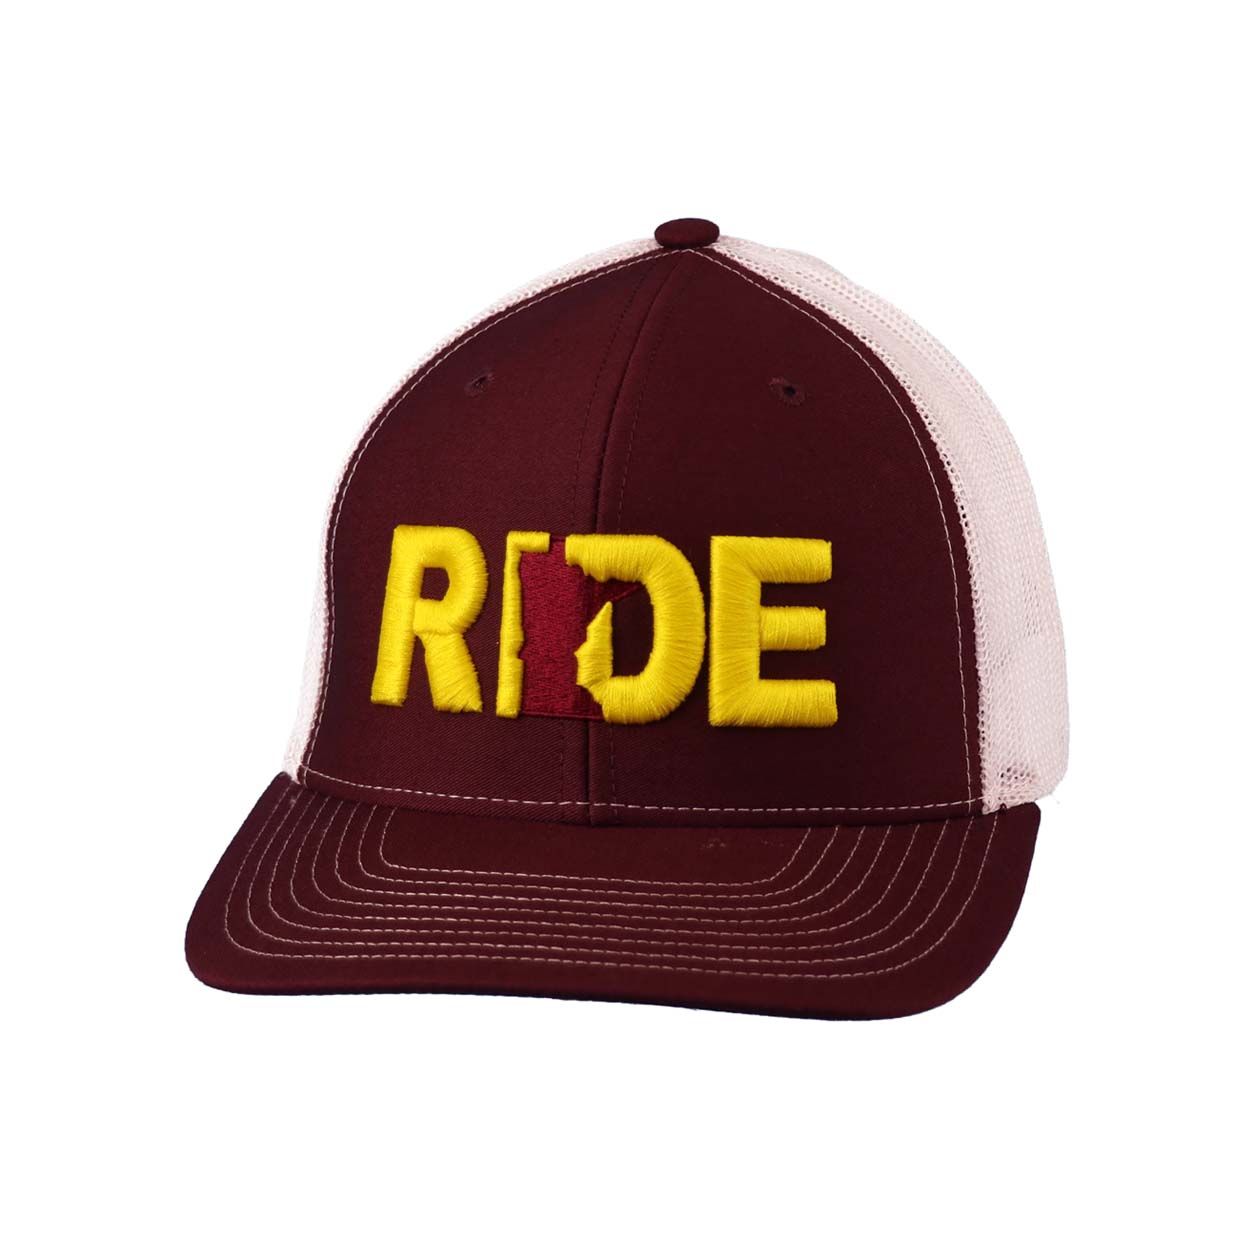 Ride Minnesota Classic Embroidered Snapback Trucker Hat Maroon/Gold